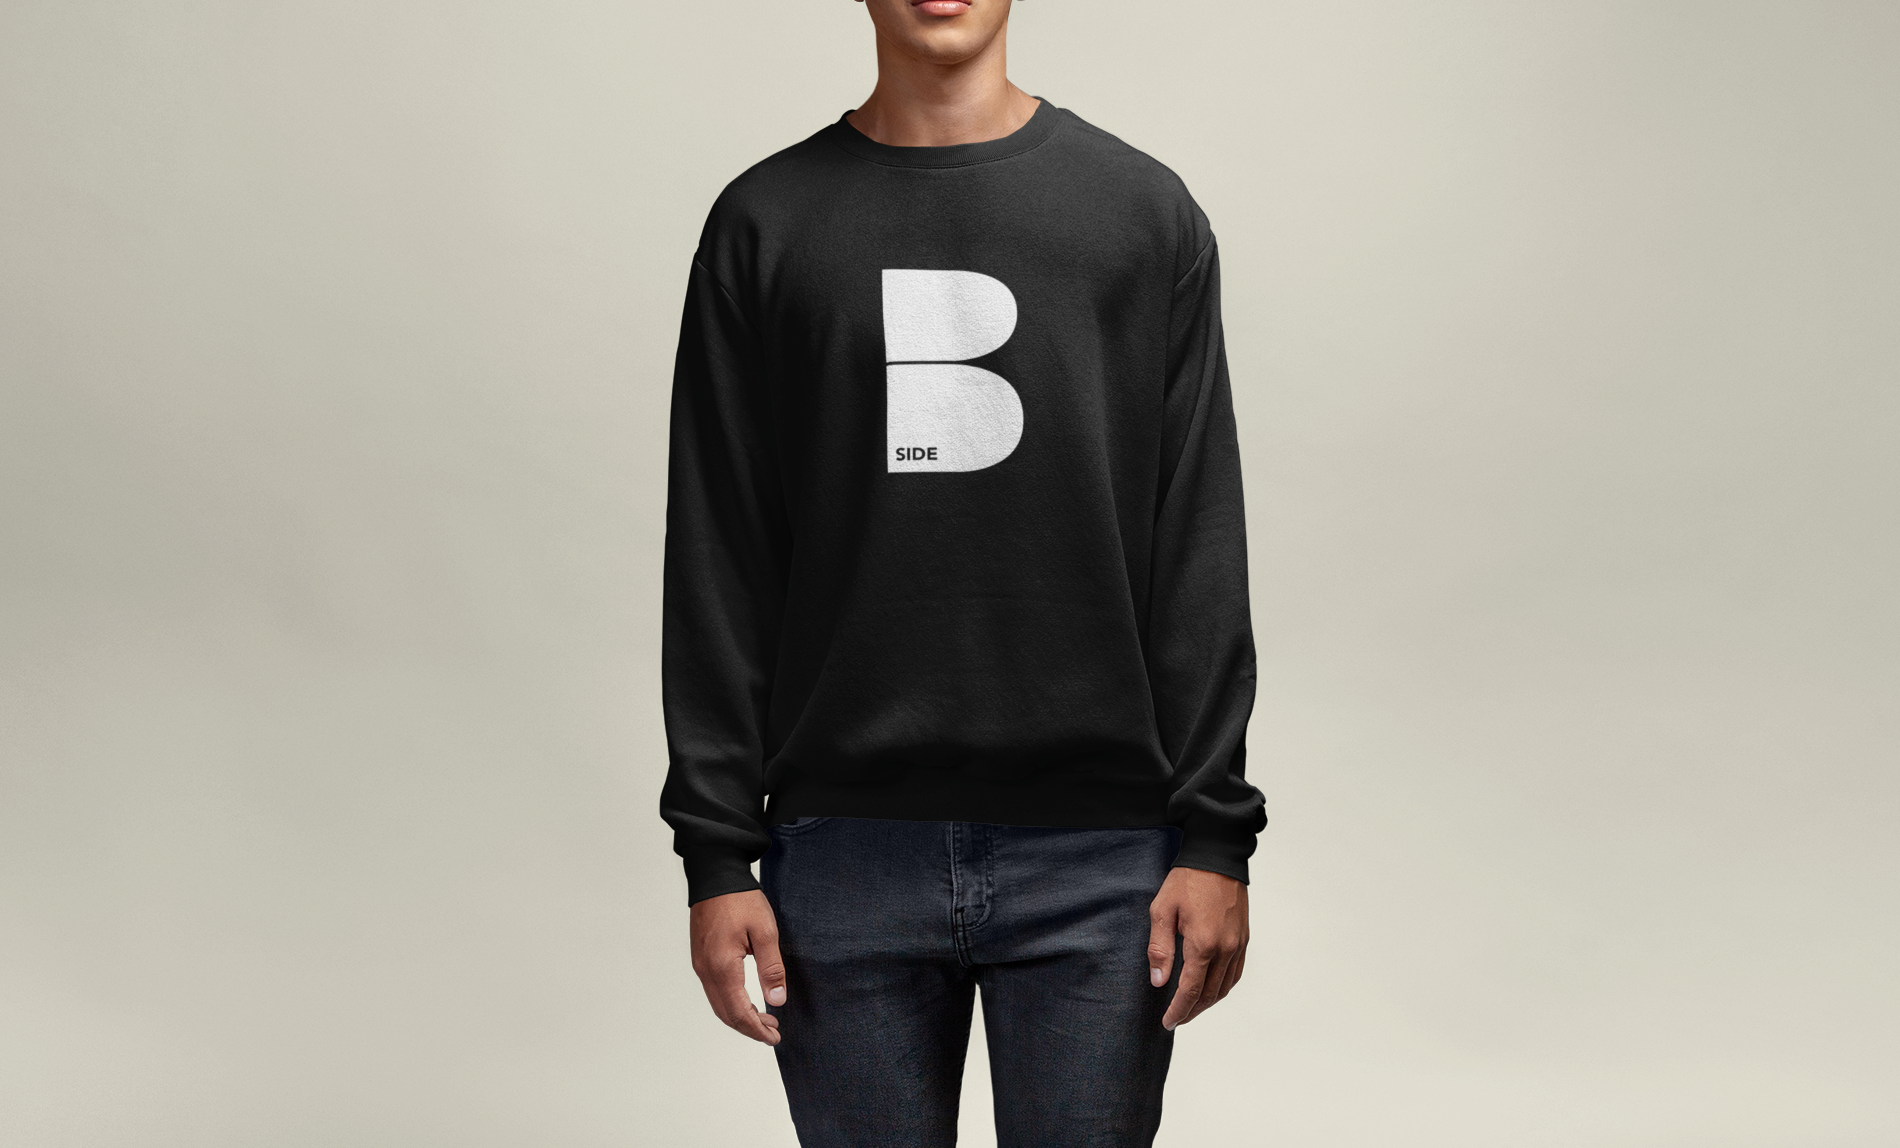 Black Original B Logo Sweat - White Print